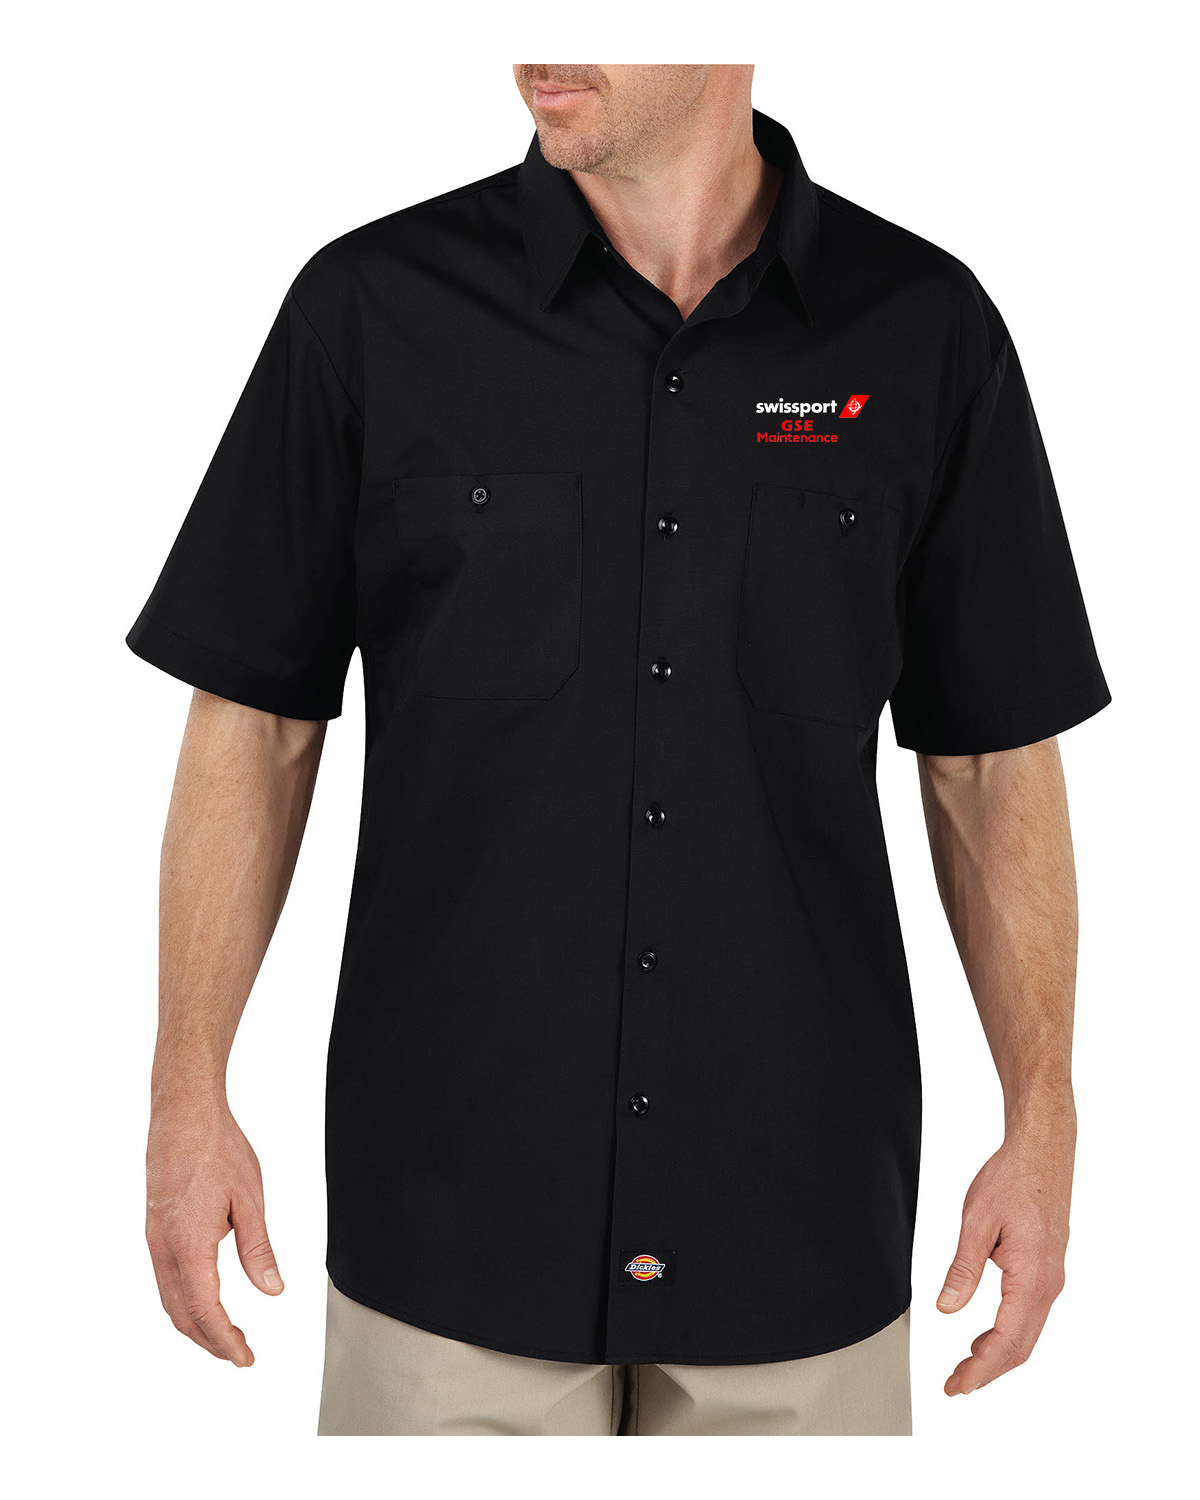 LS516 Swissport Dickies Men's 4.25 oz. MaxCool Premium Performance Work Shirt